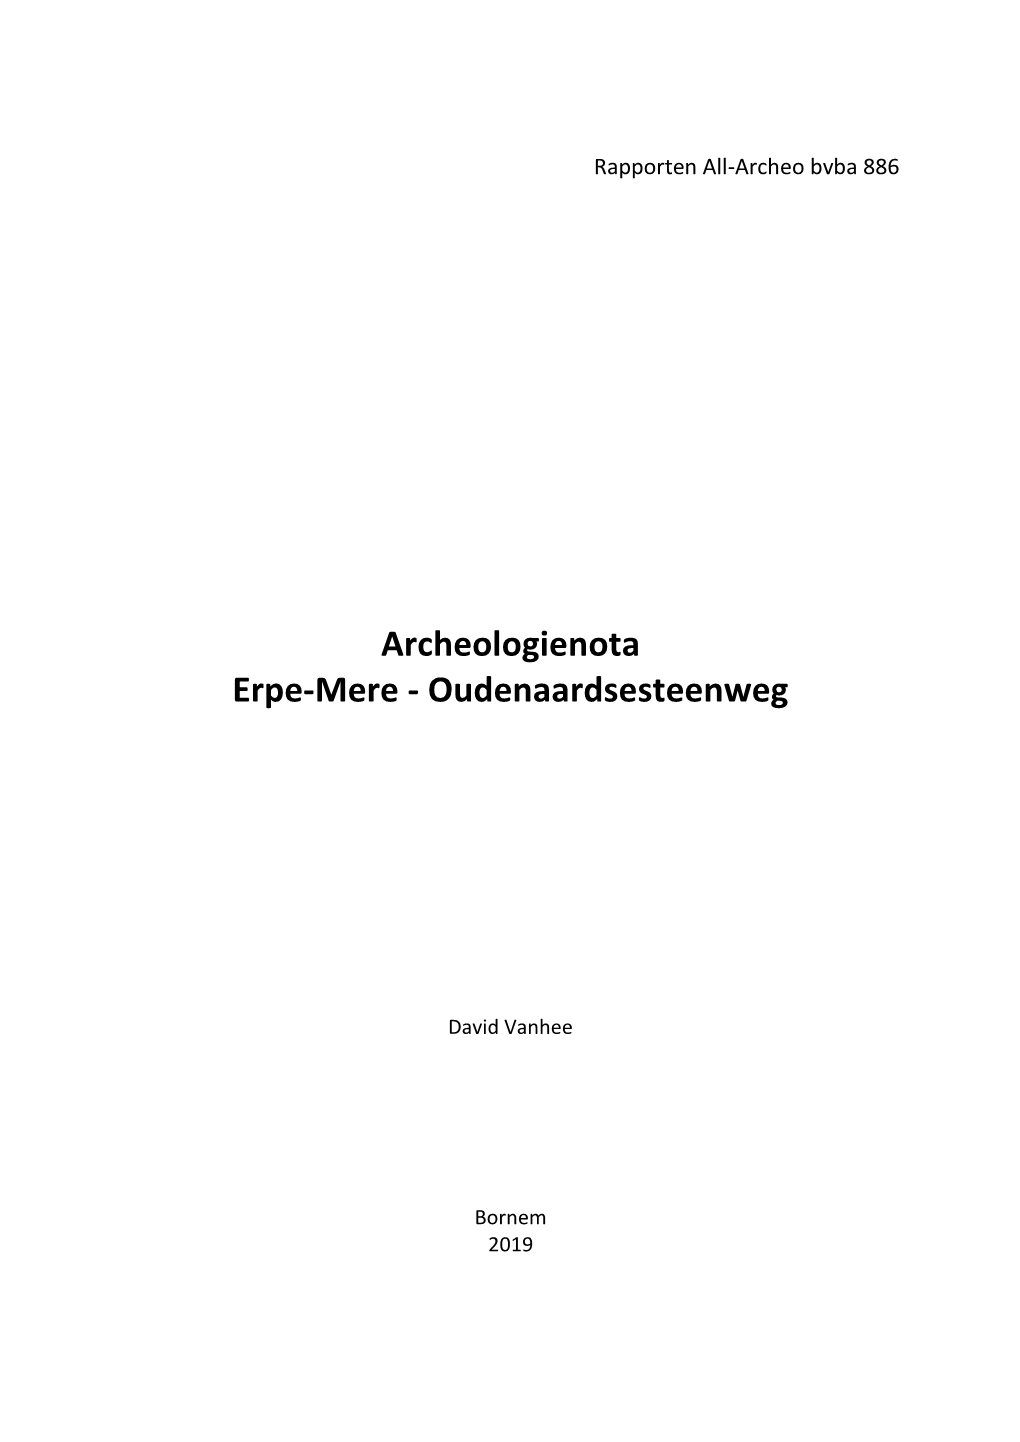 Archeologienota Erpe-Mere - Oudenaardsesteenweg